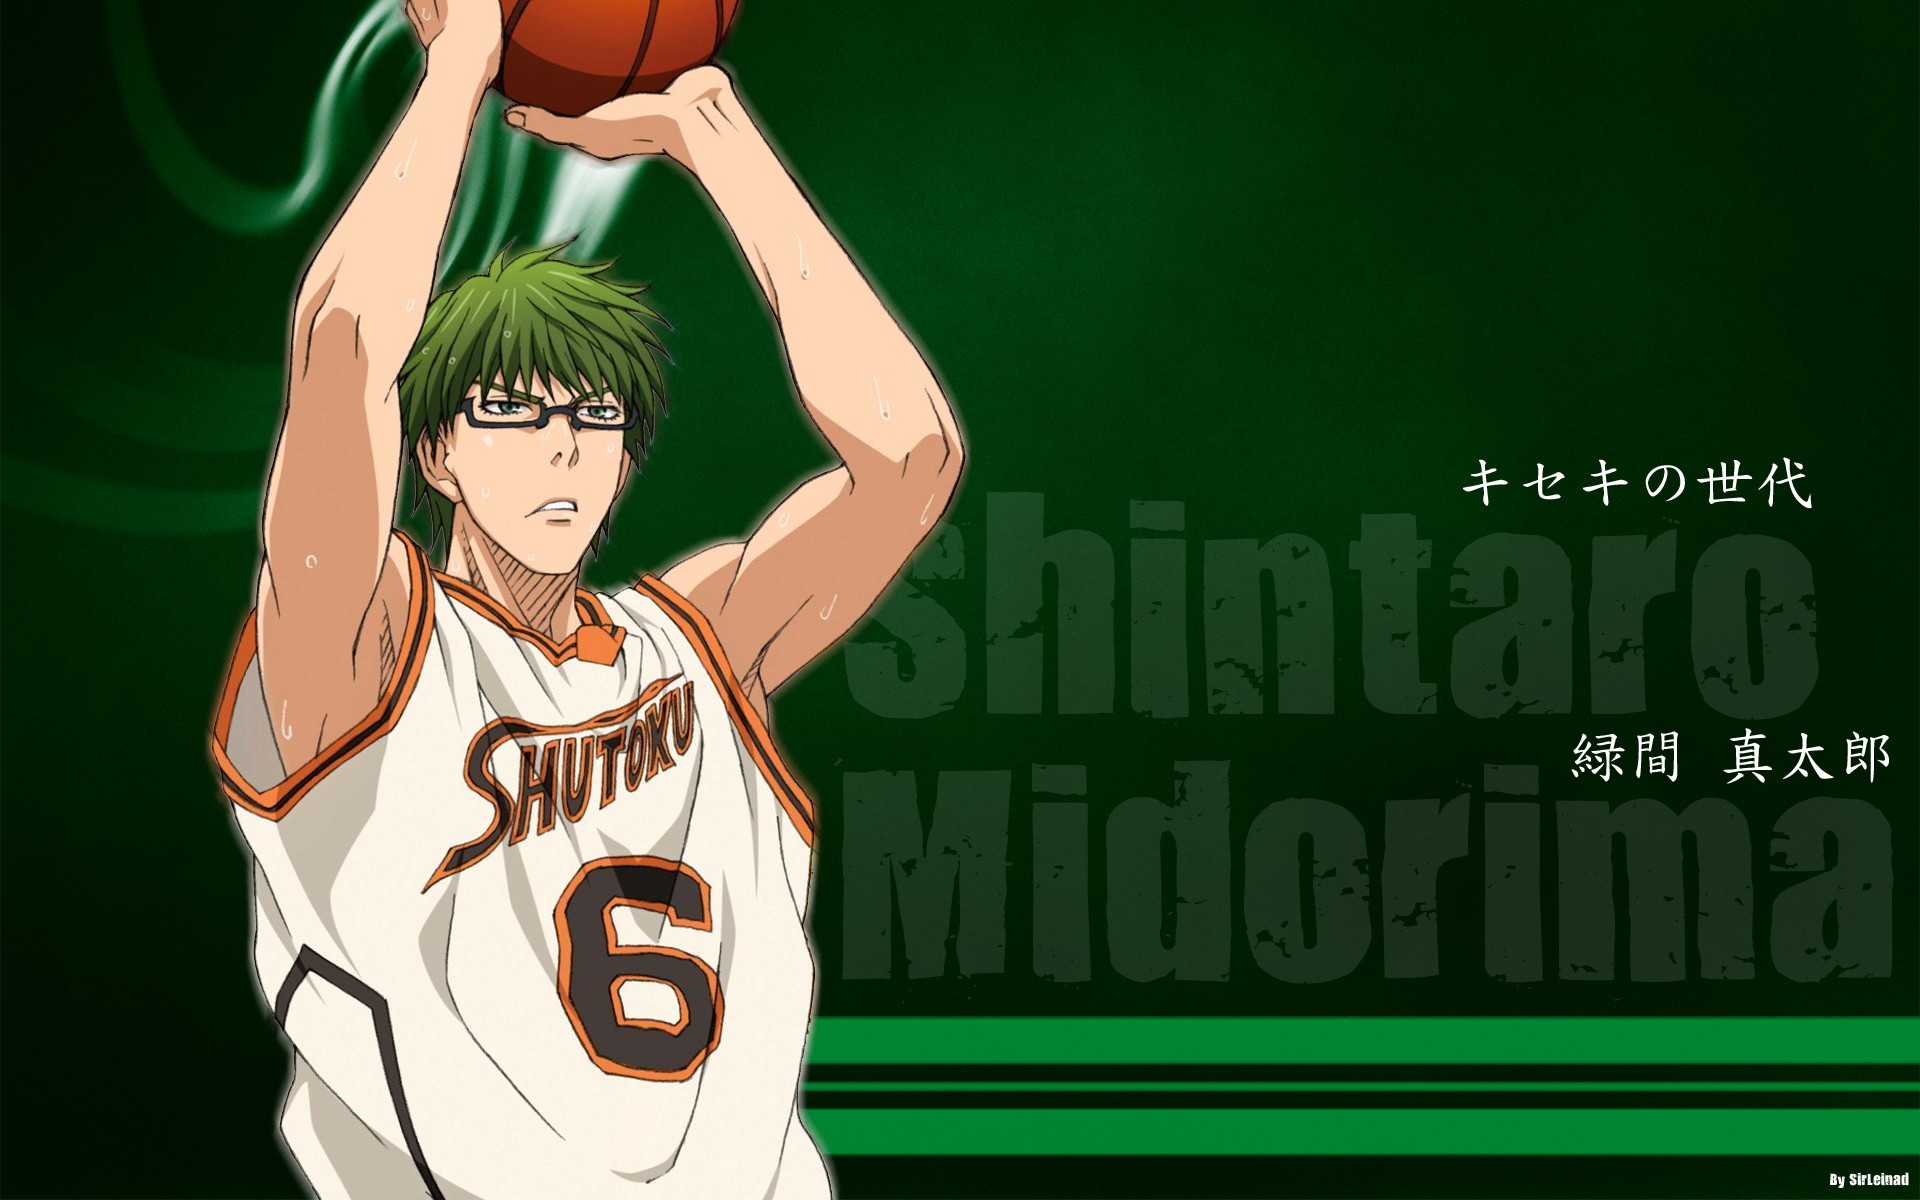 5. "Kuroko's Basketball" - wide 5